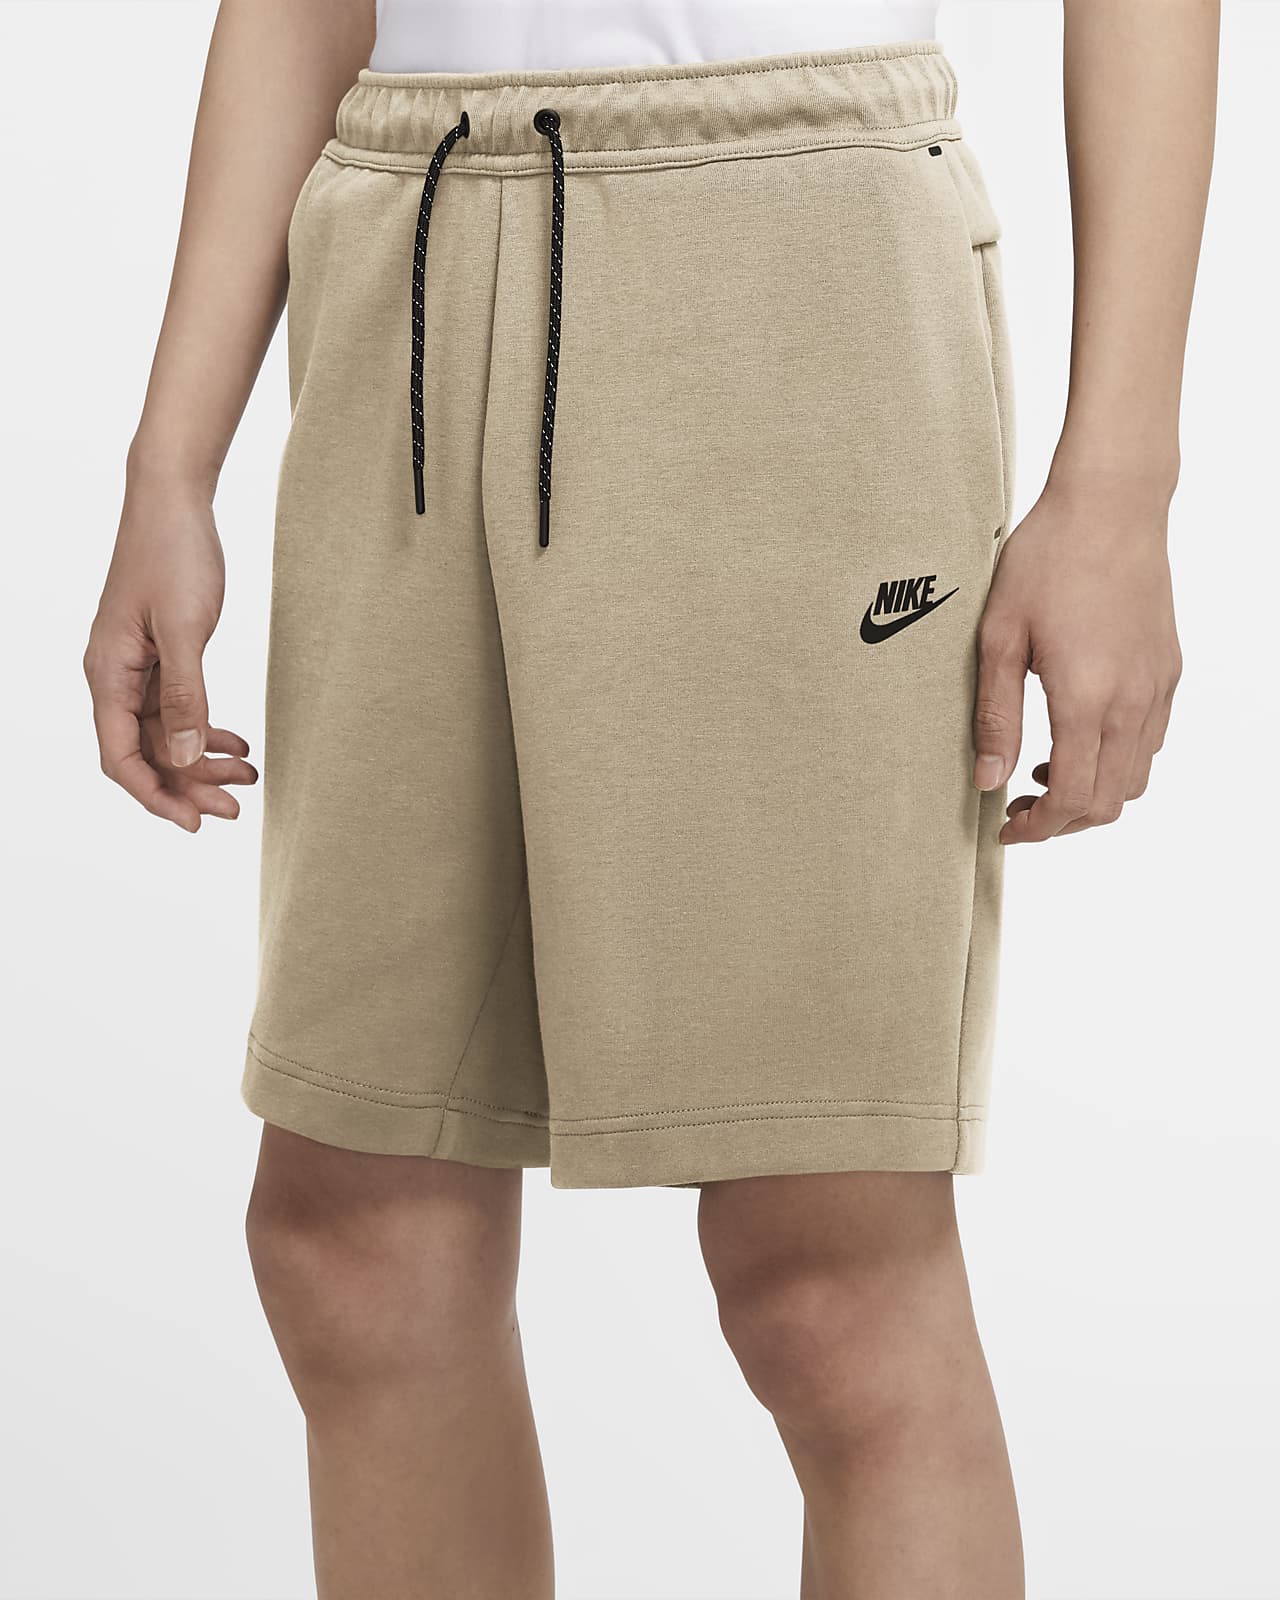 nike tech fleece shorts ebay